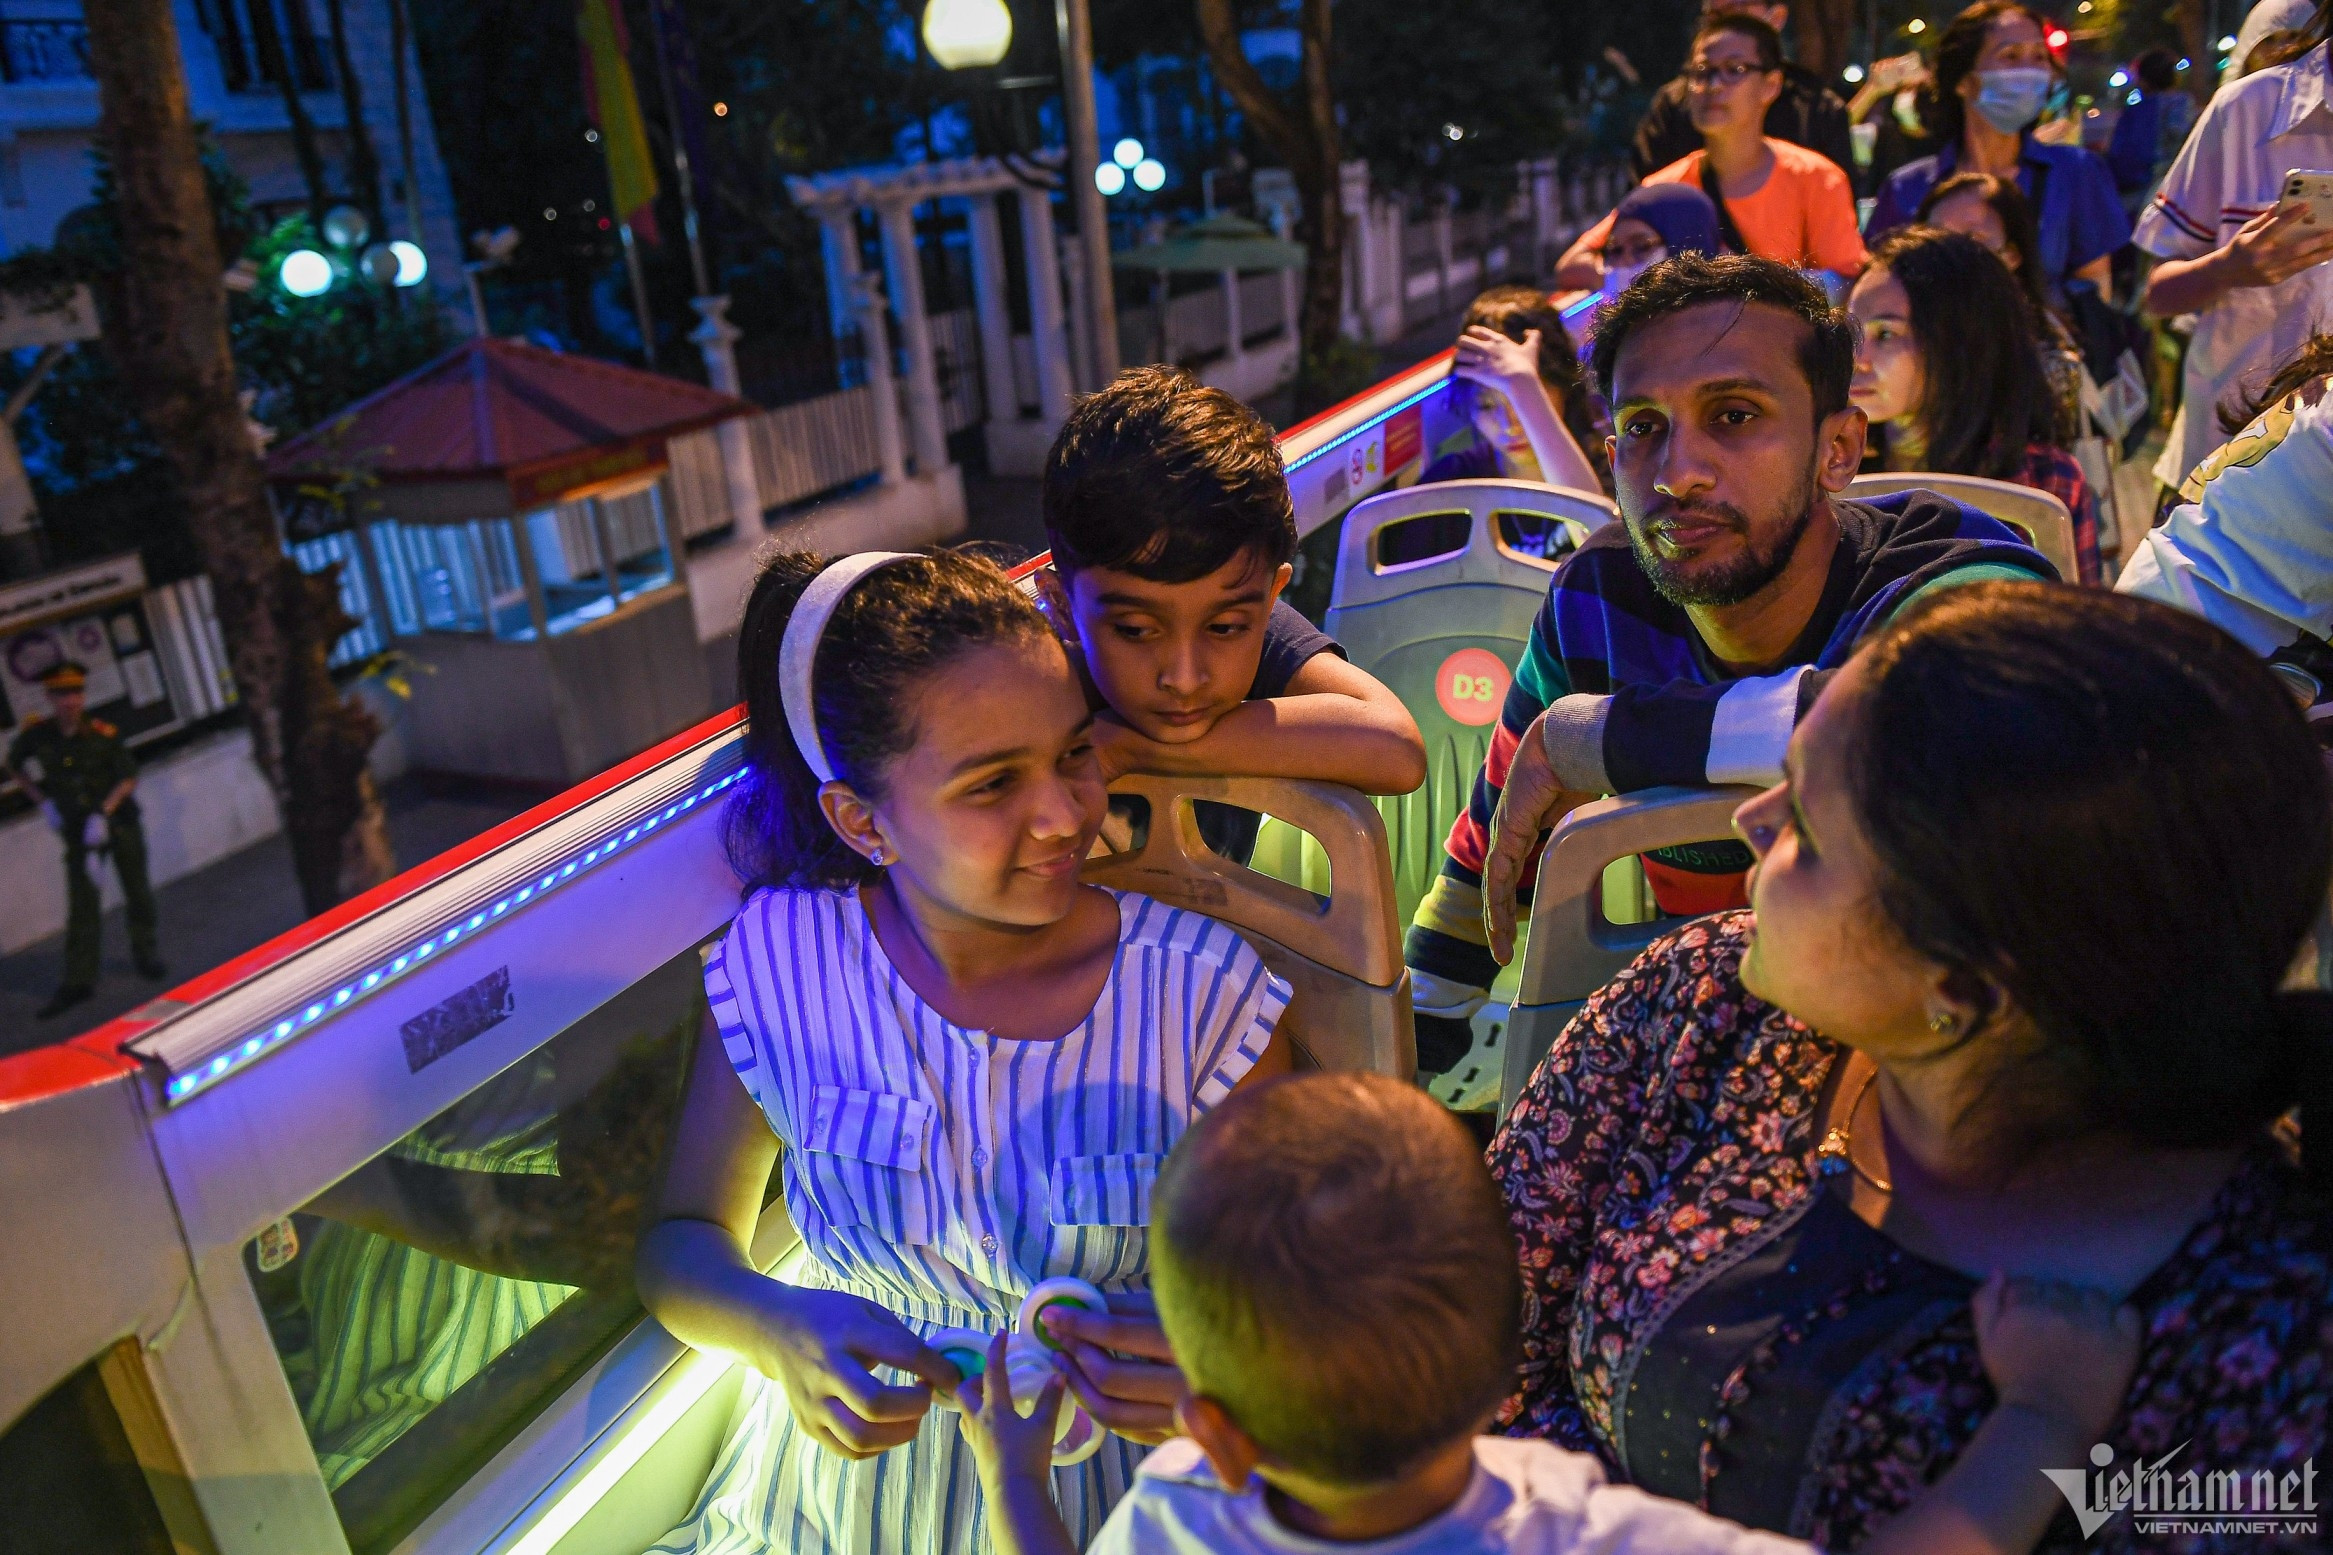 Hanoi lacks night activities to entertain foreign travelers